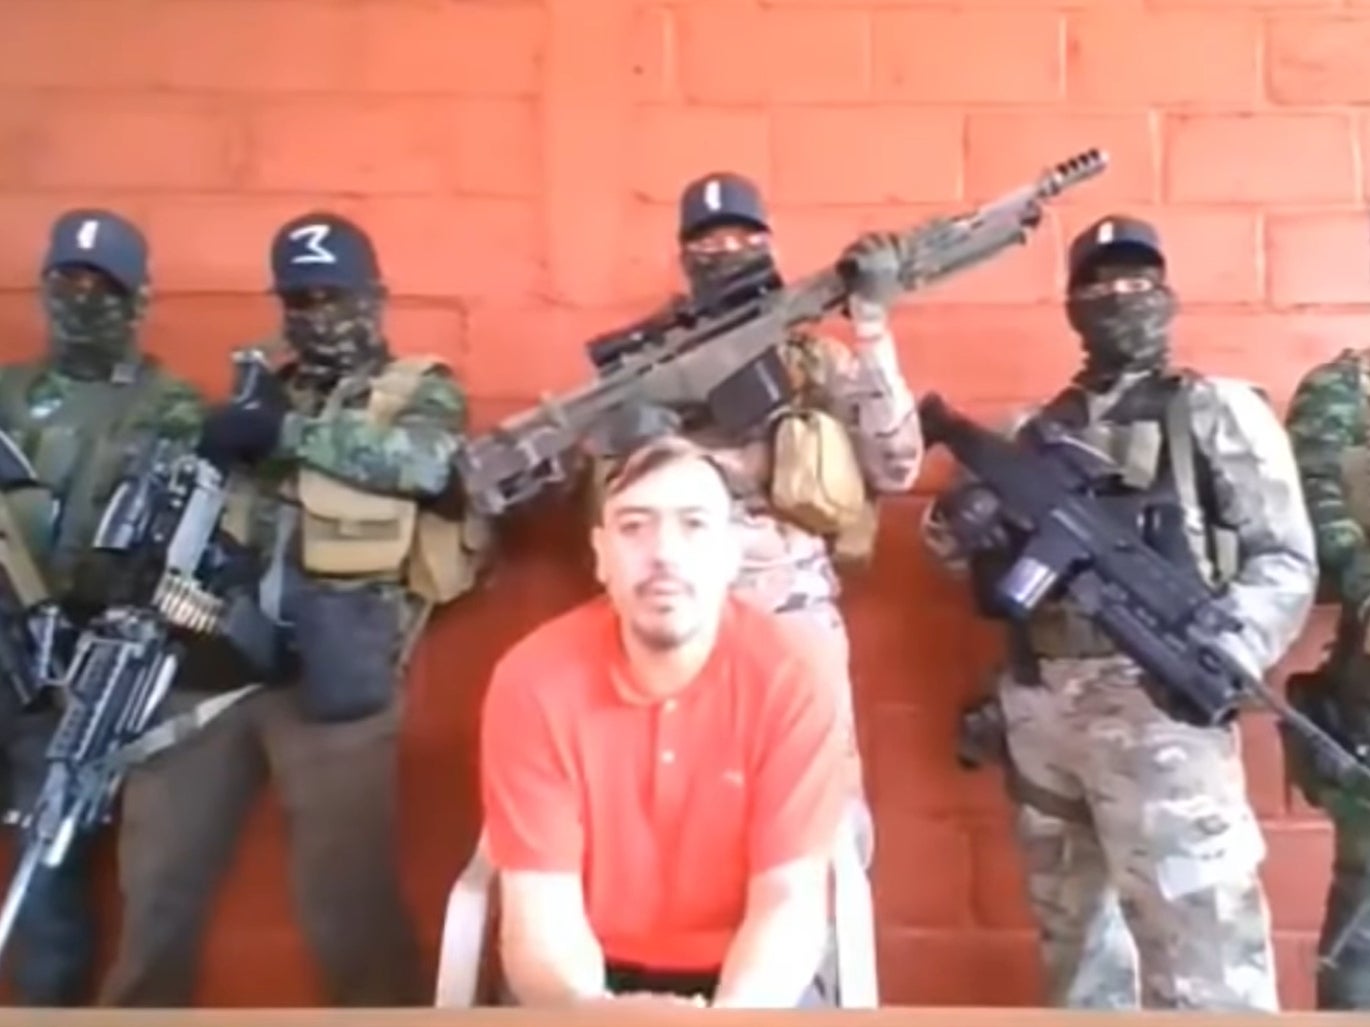 Cartel boss Carlos Enrique Sanchez, ‘El Cholo’, appeared in a video shortly before found dead in a Mexico park